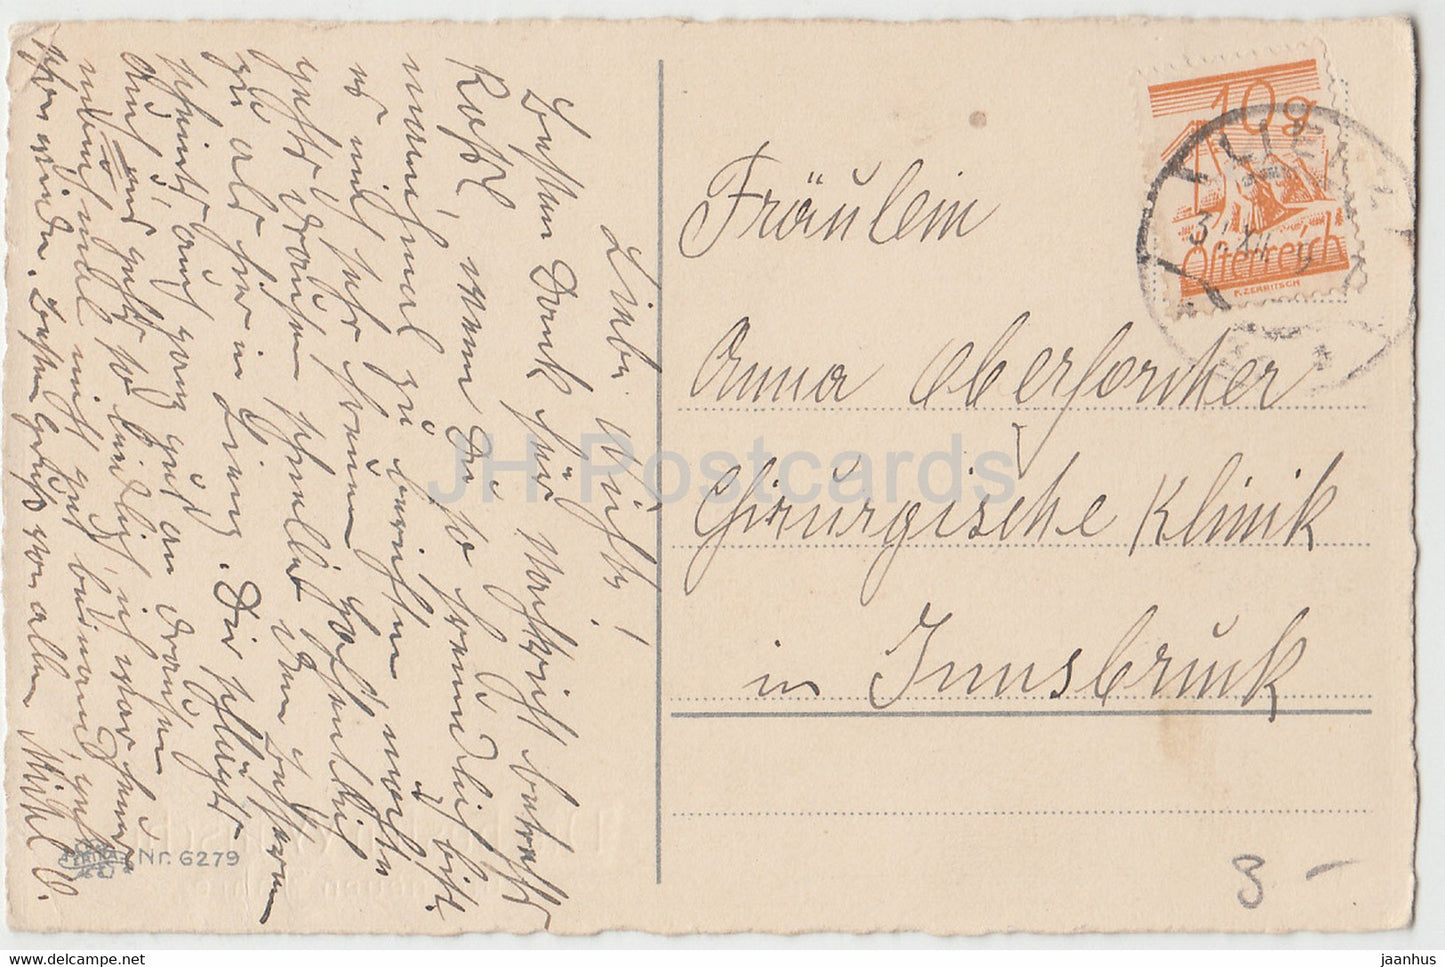 Carte de vœux du Nouvel An - Die Besten Wunsche zum neuen Jahre - ERIKA 6279 - carte postale ancienne - 1934 - Allemagne - utilisé